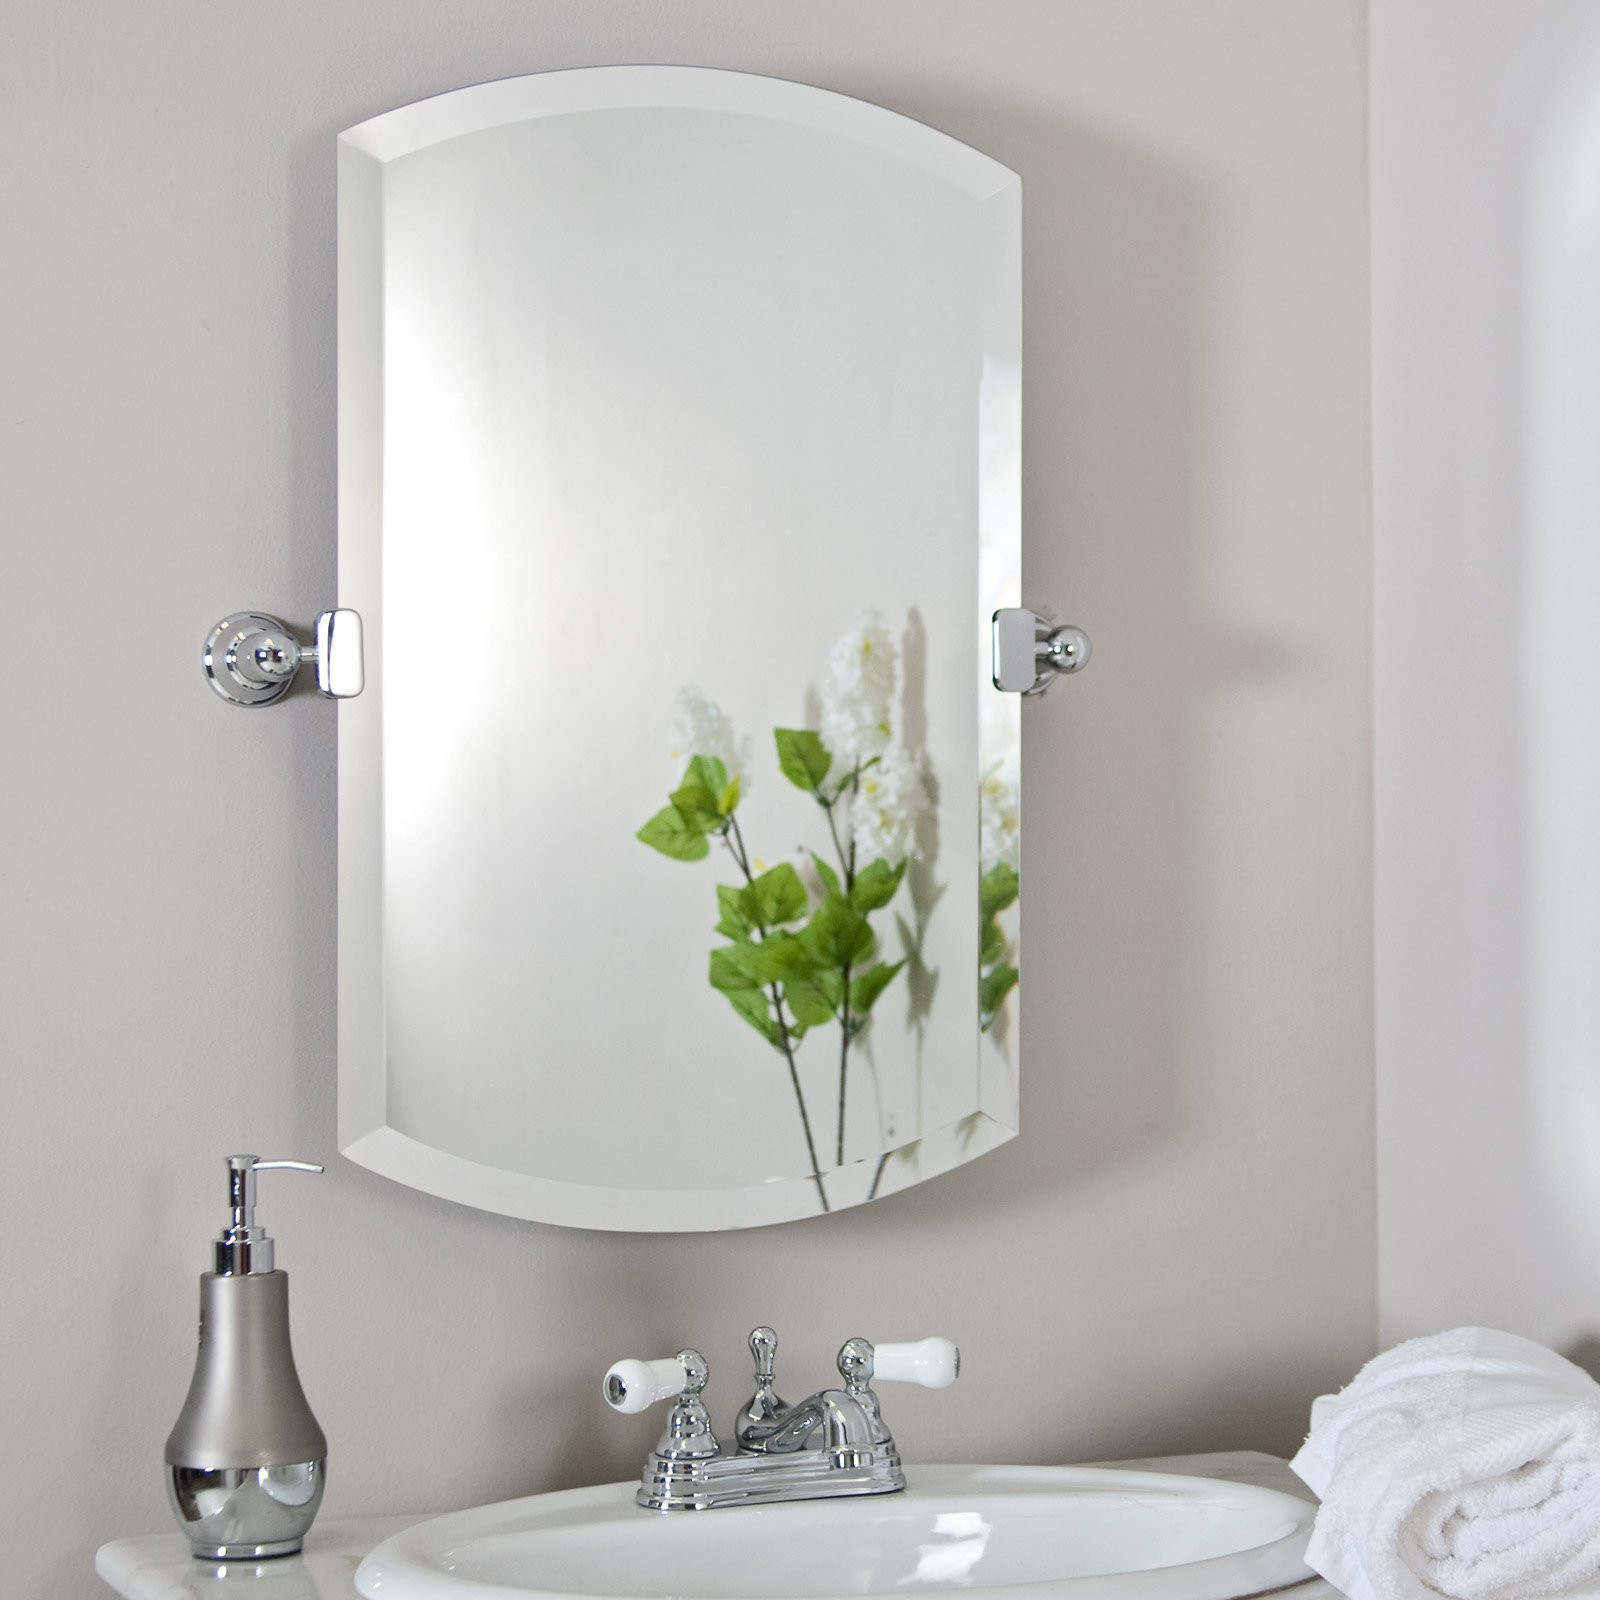 Designer Bathroom Mirrors
 Bathroom Mirror Designs and Decorative Ideas